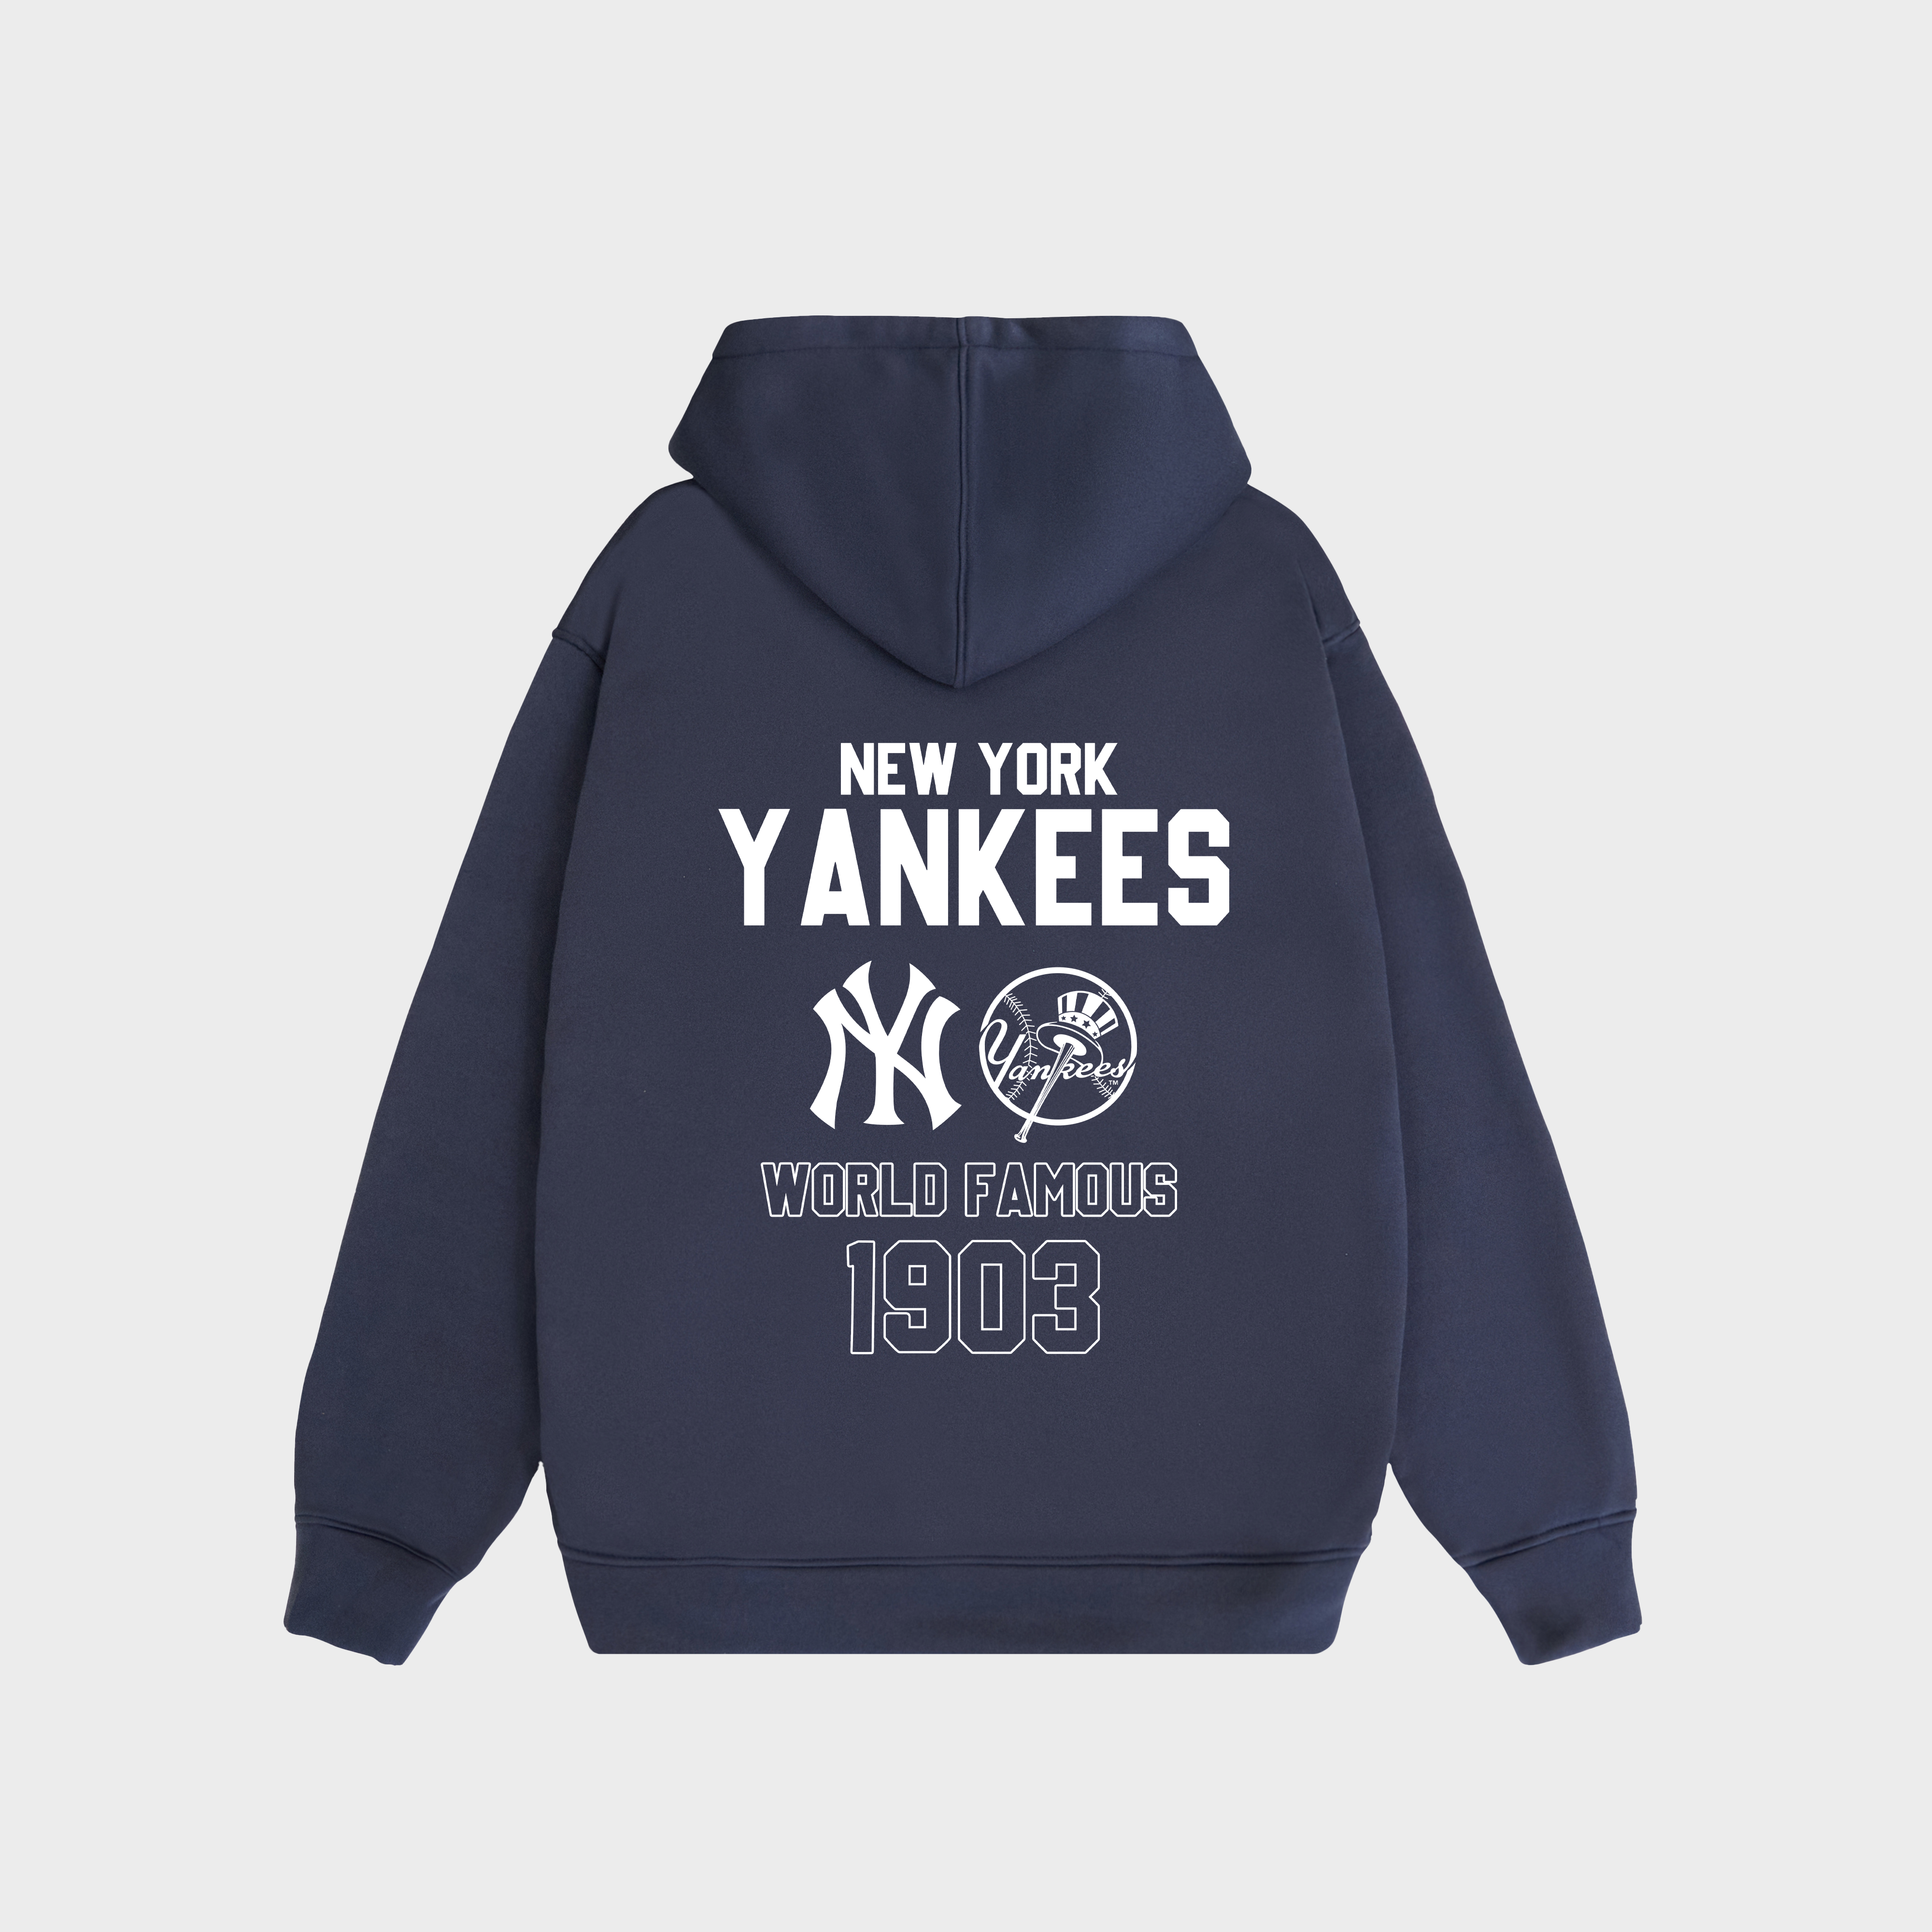 MLB New York Yankees World Famous 1093 Hoodie